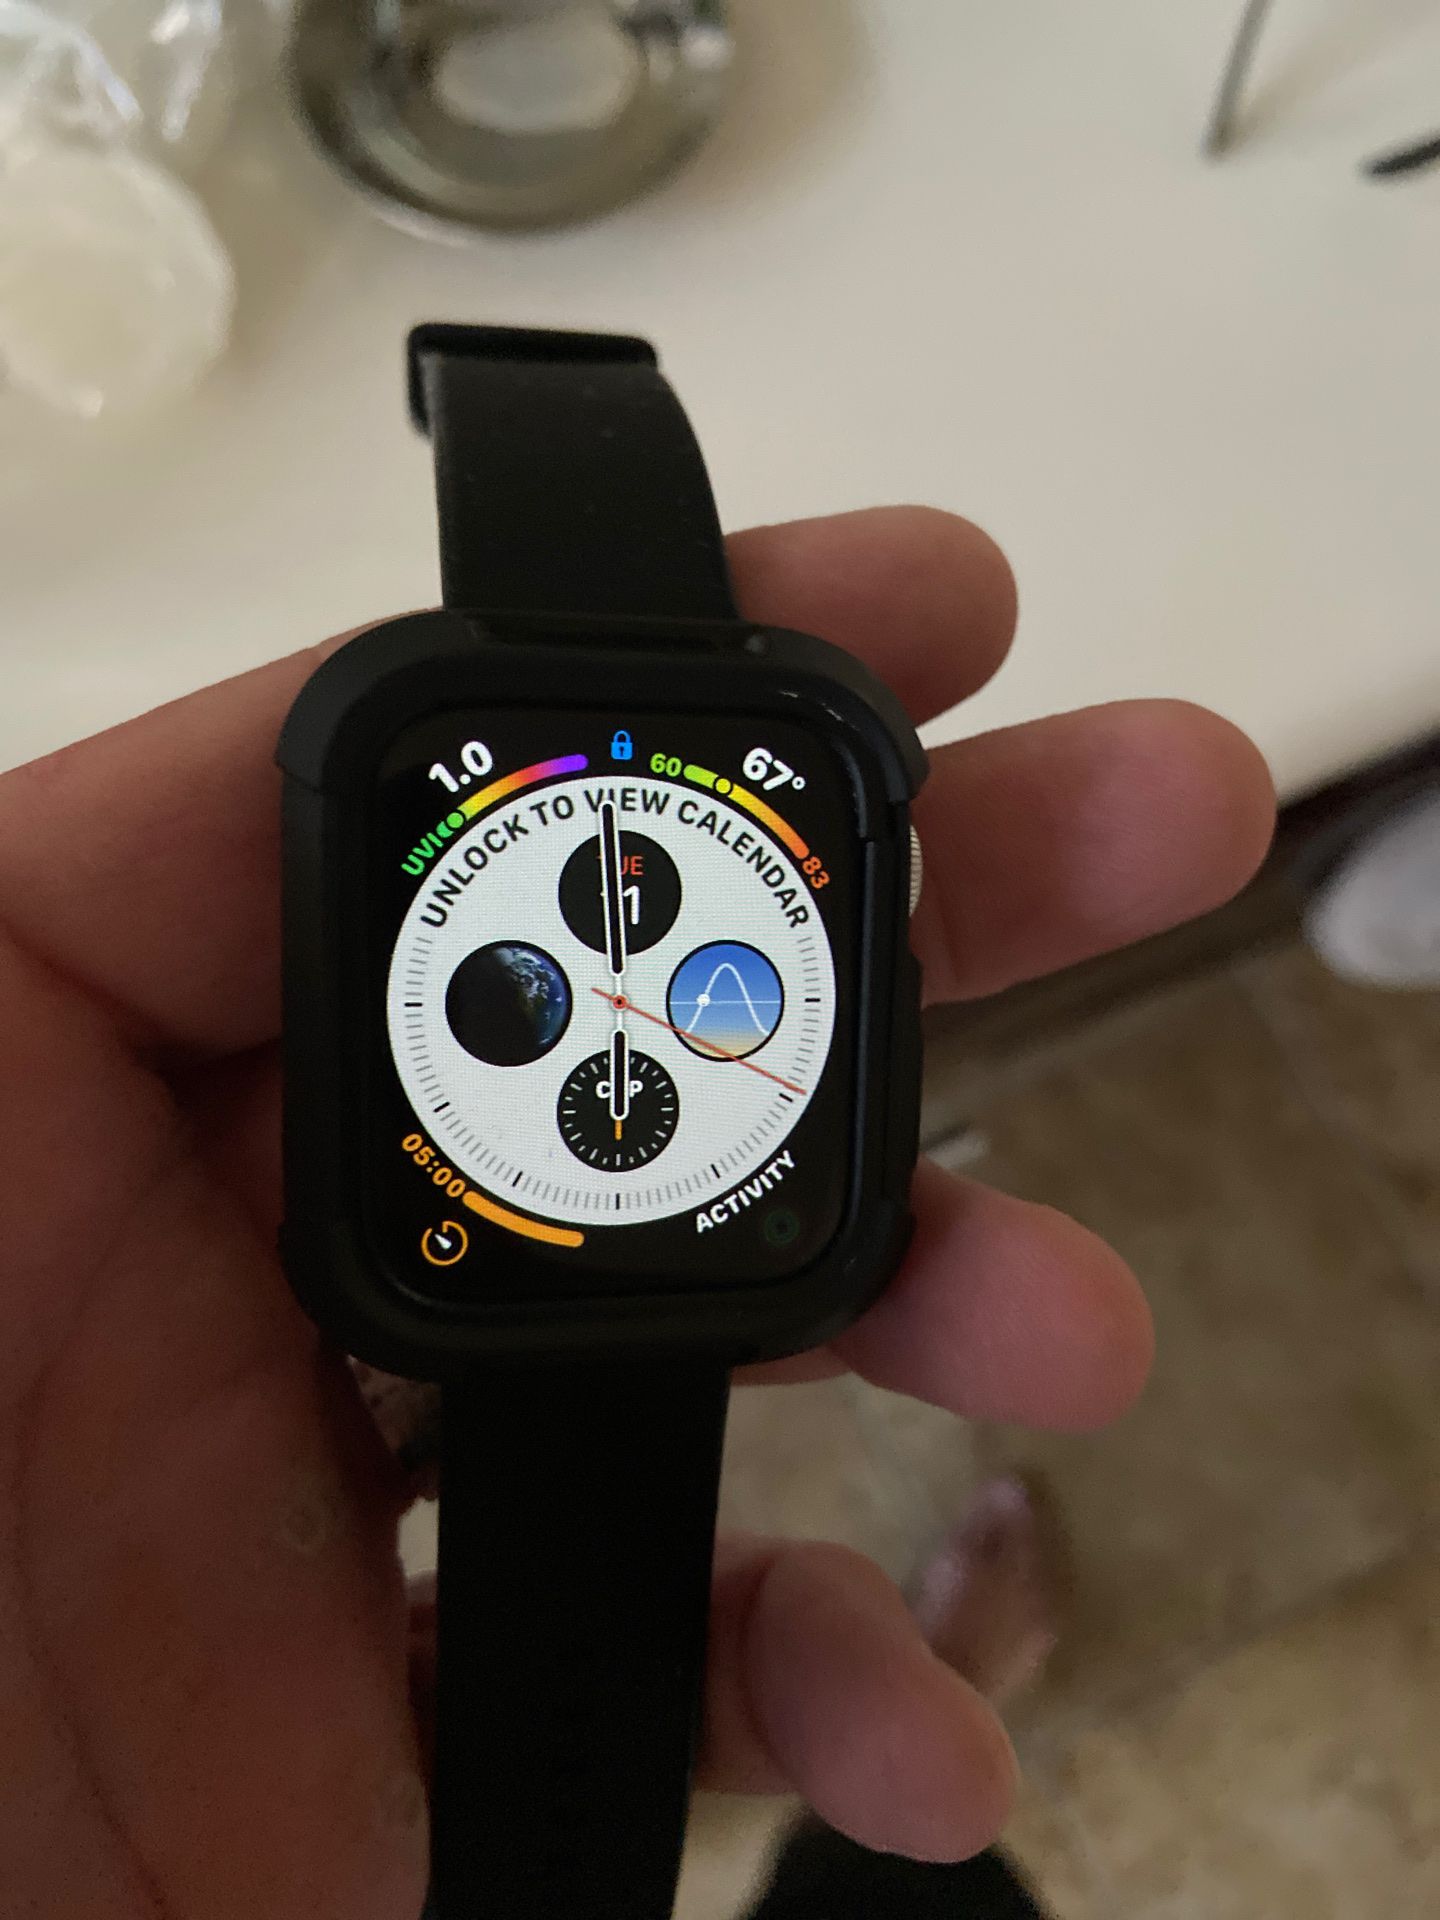 Series 5 Apple Watch 44mm gps + cellular